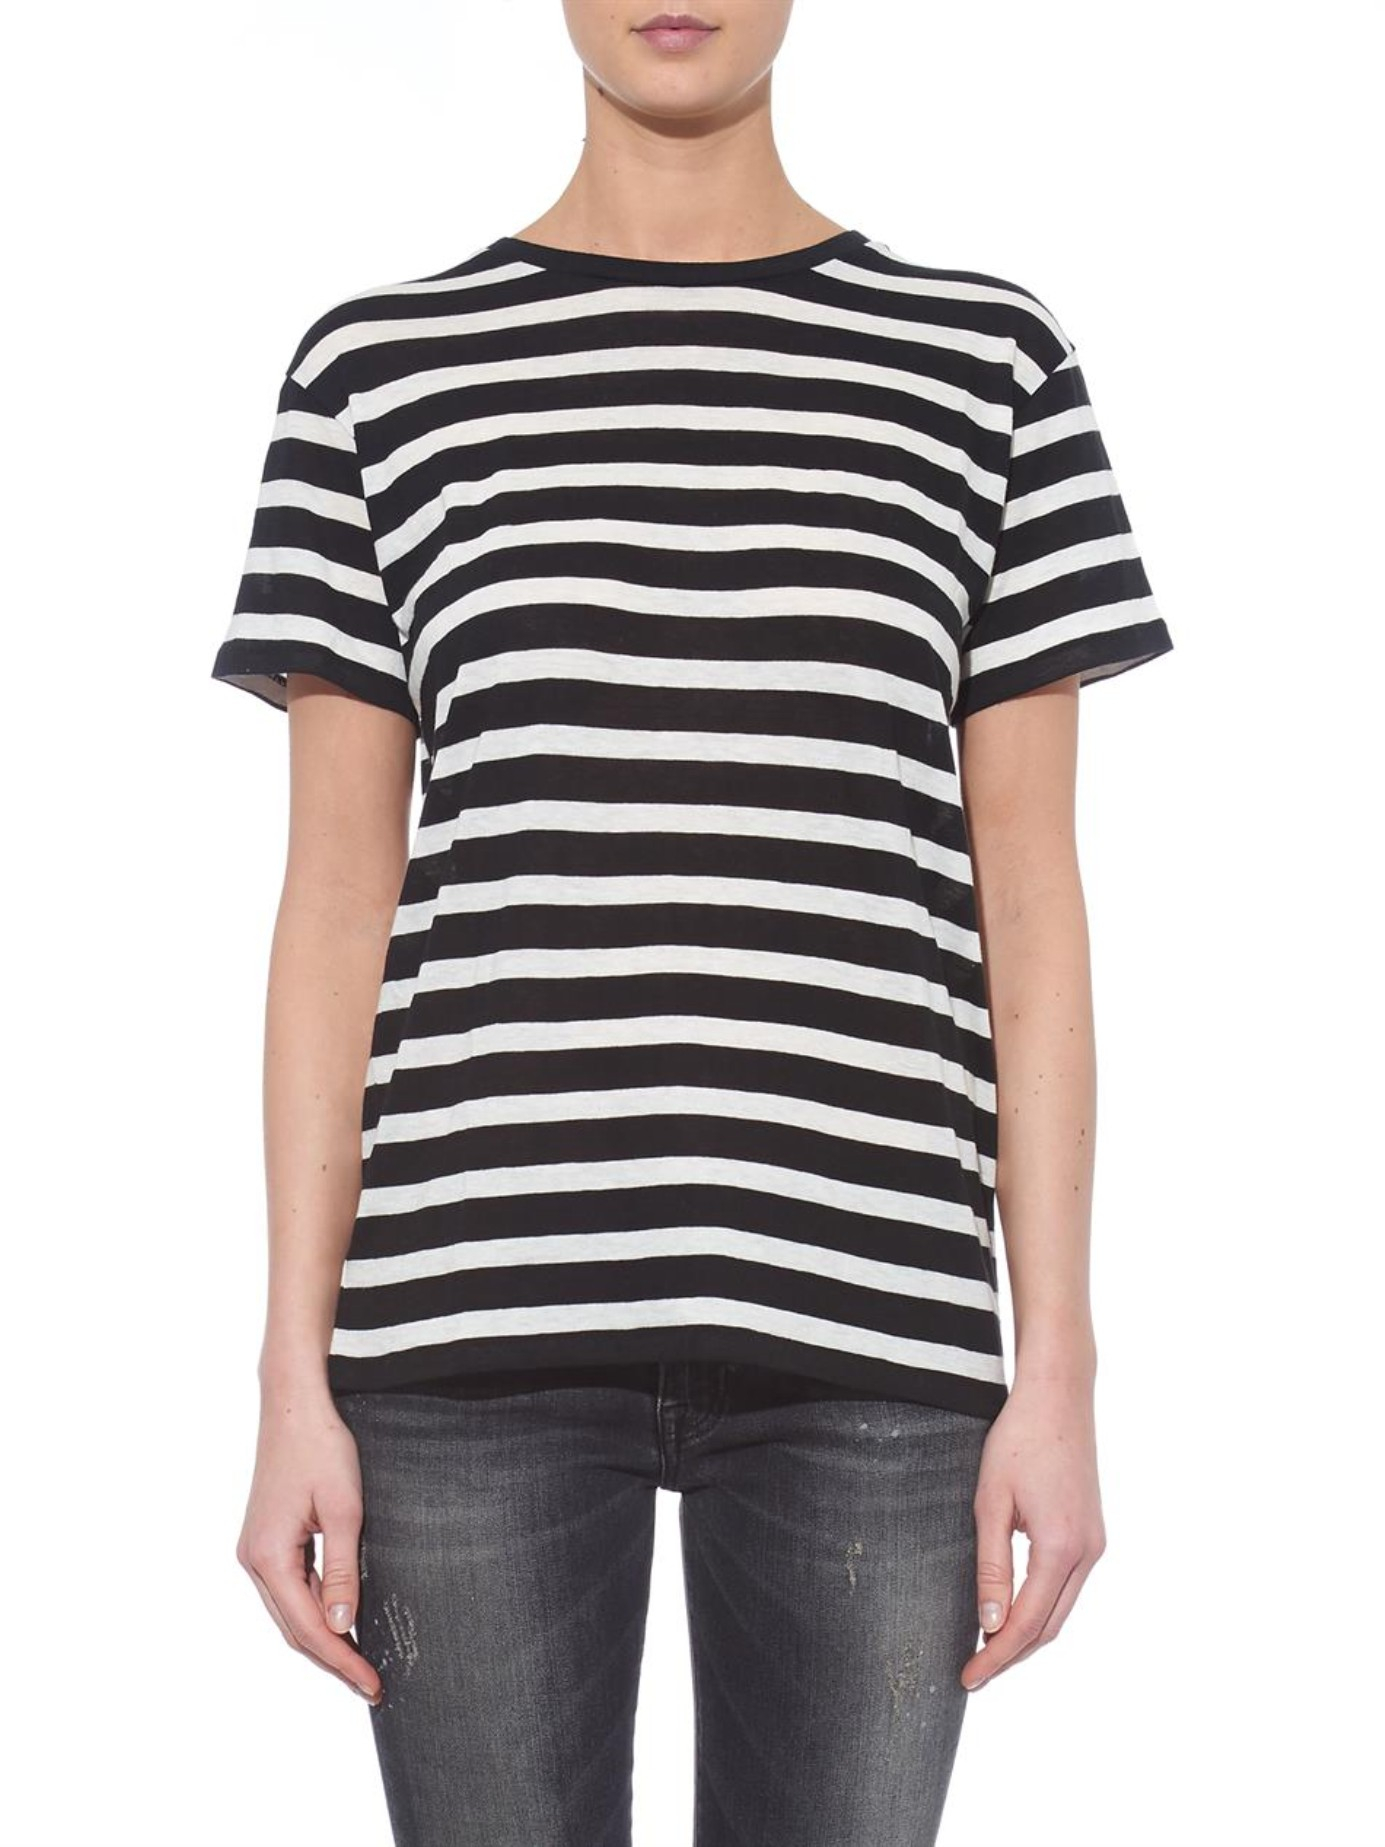 Lyst - R13 Boy Striped Cotton-Blend T-Shirt in Black